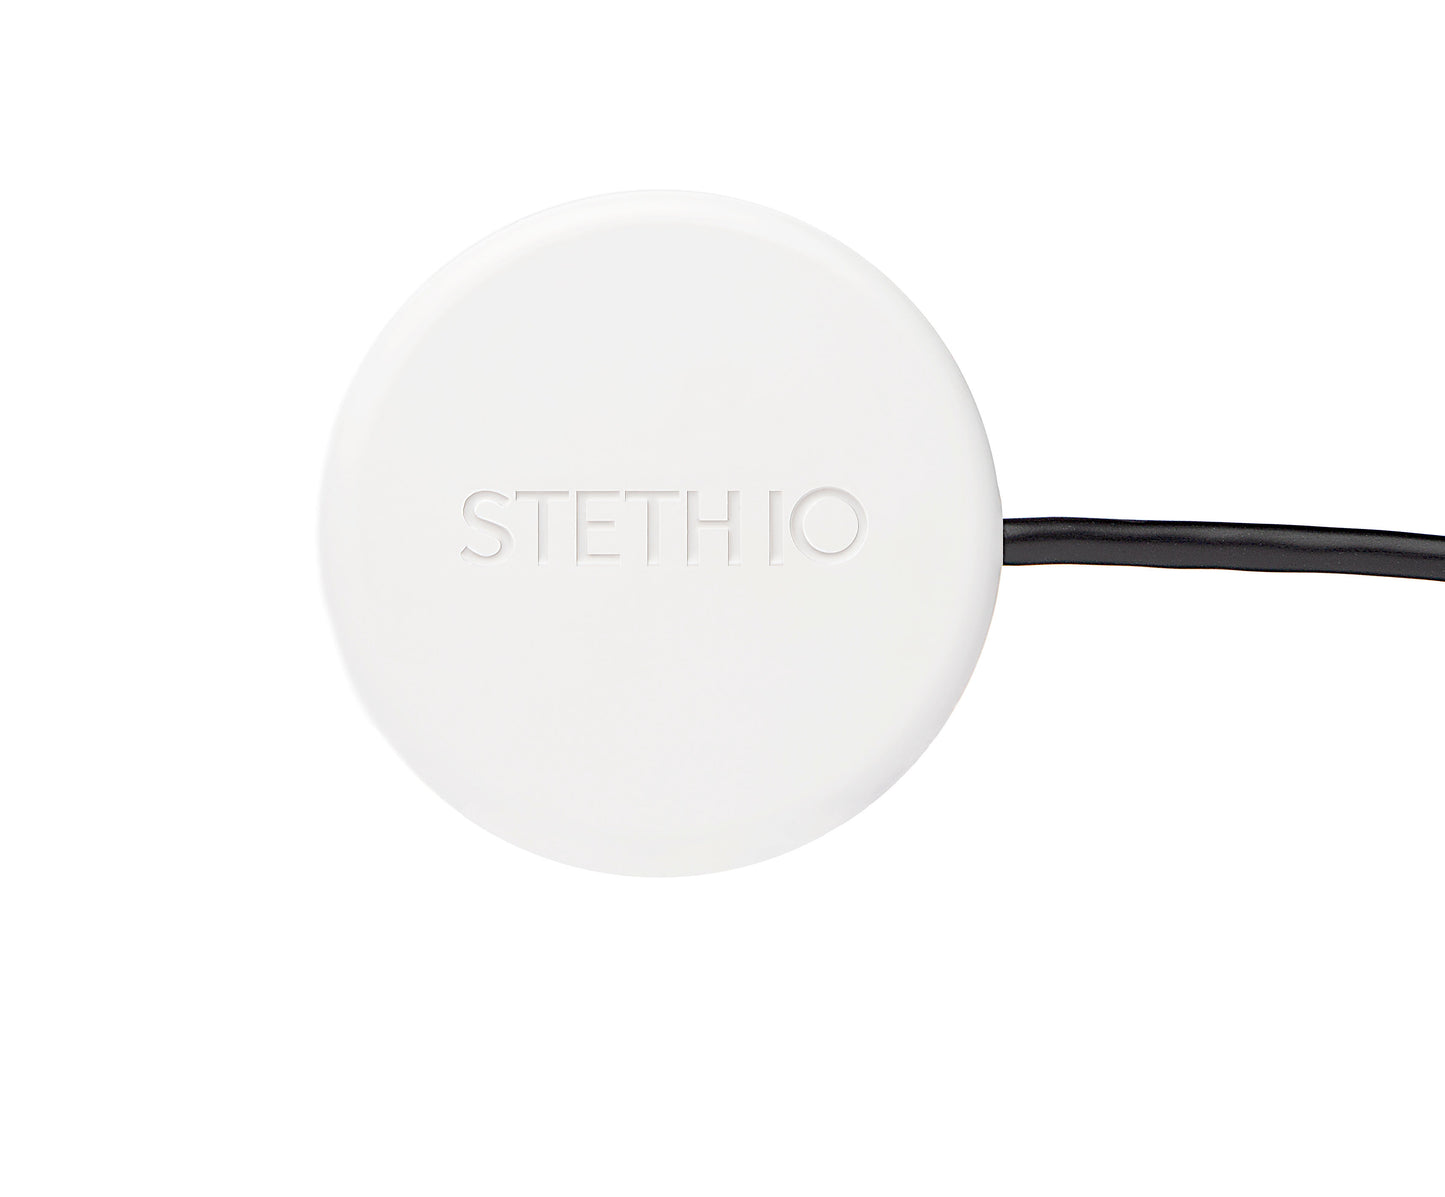 Steth IO Spot Device